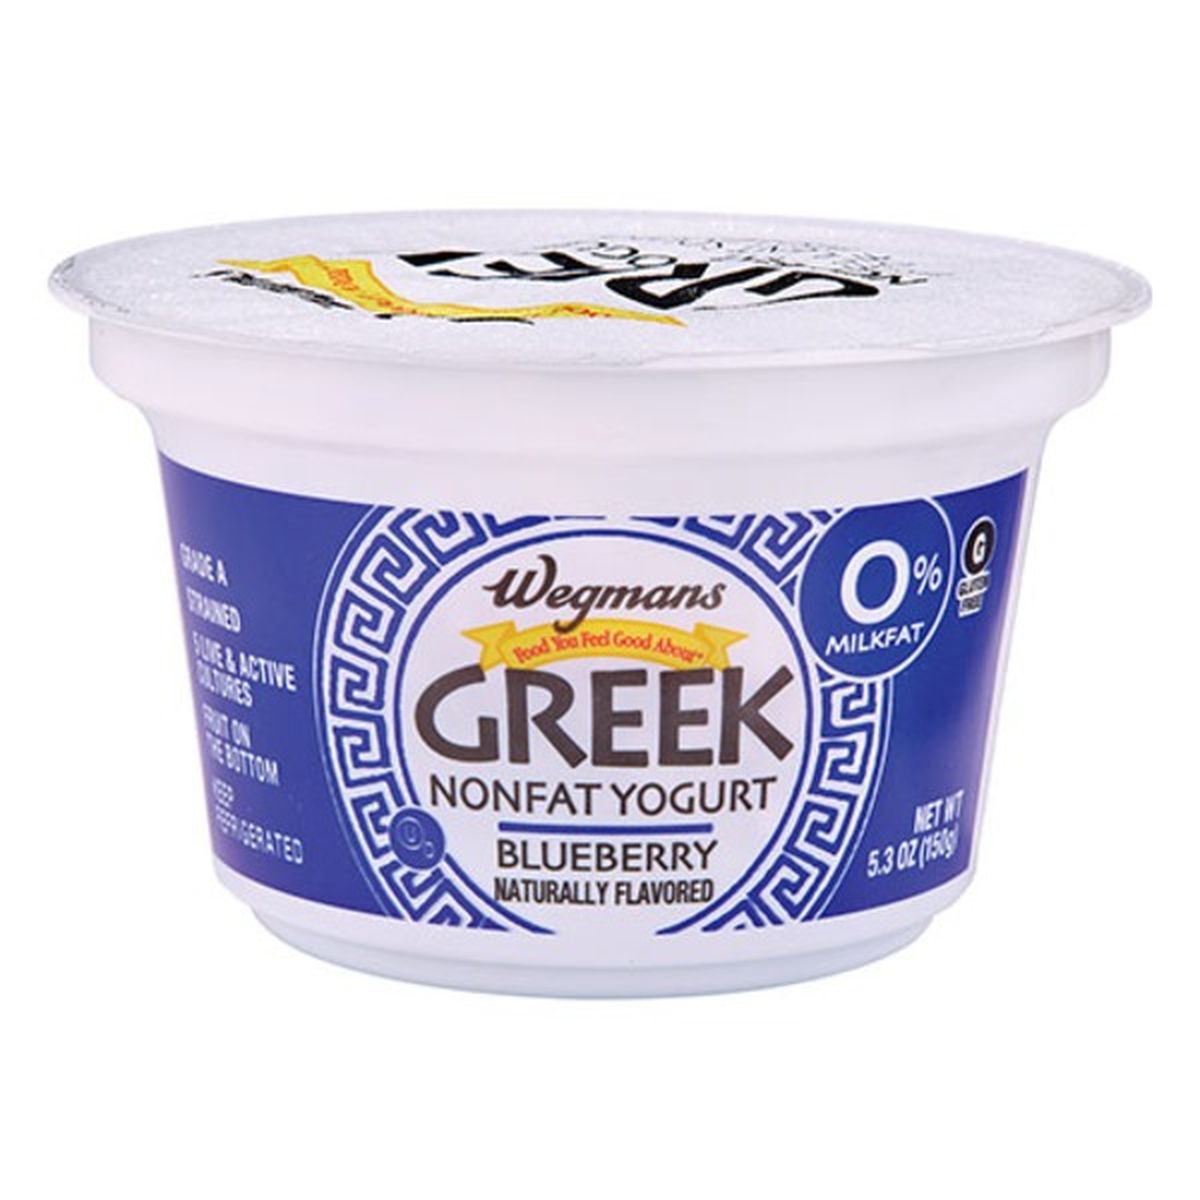 Calories in Wegmans Greek Blueberry Nonfat Yogurt